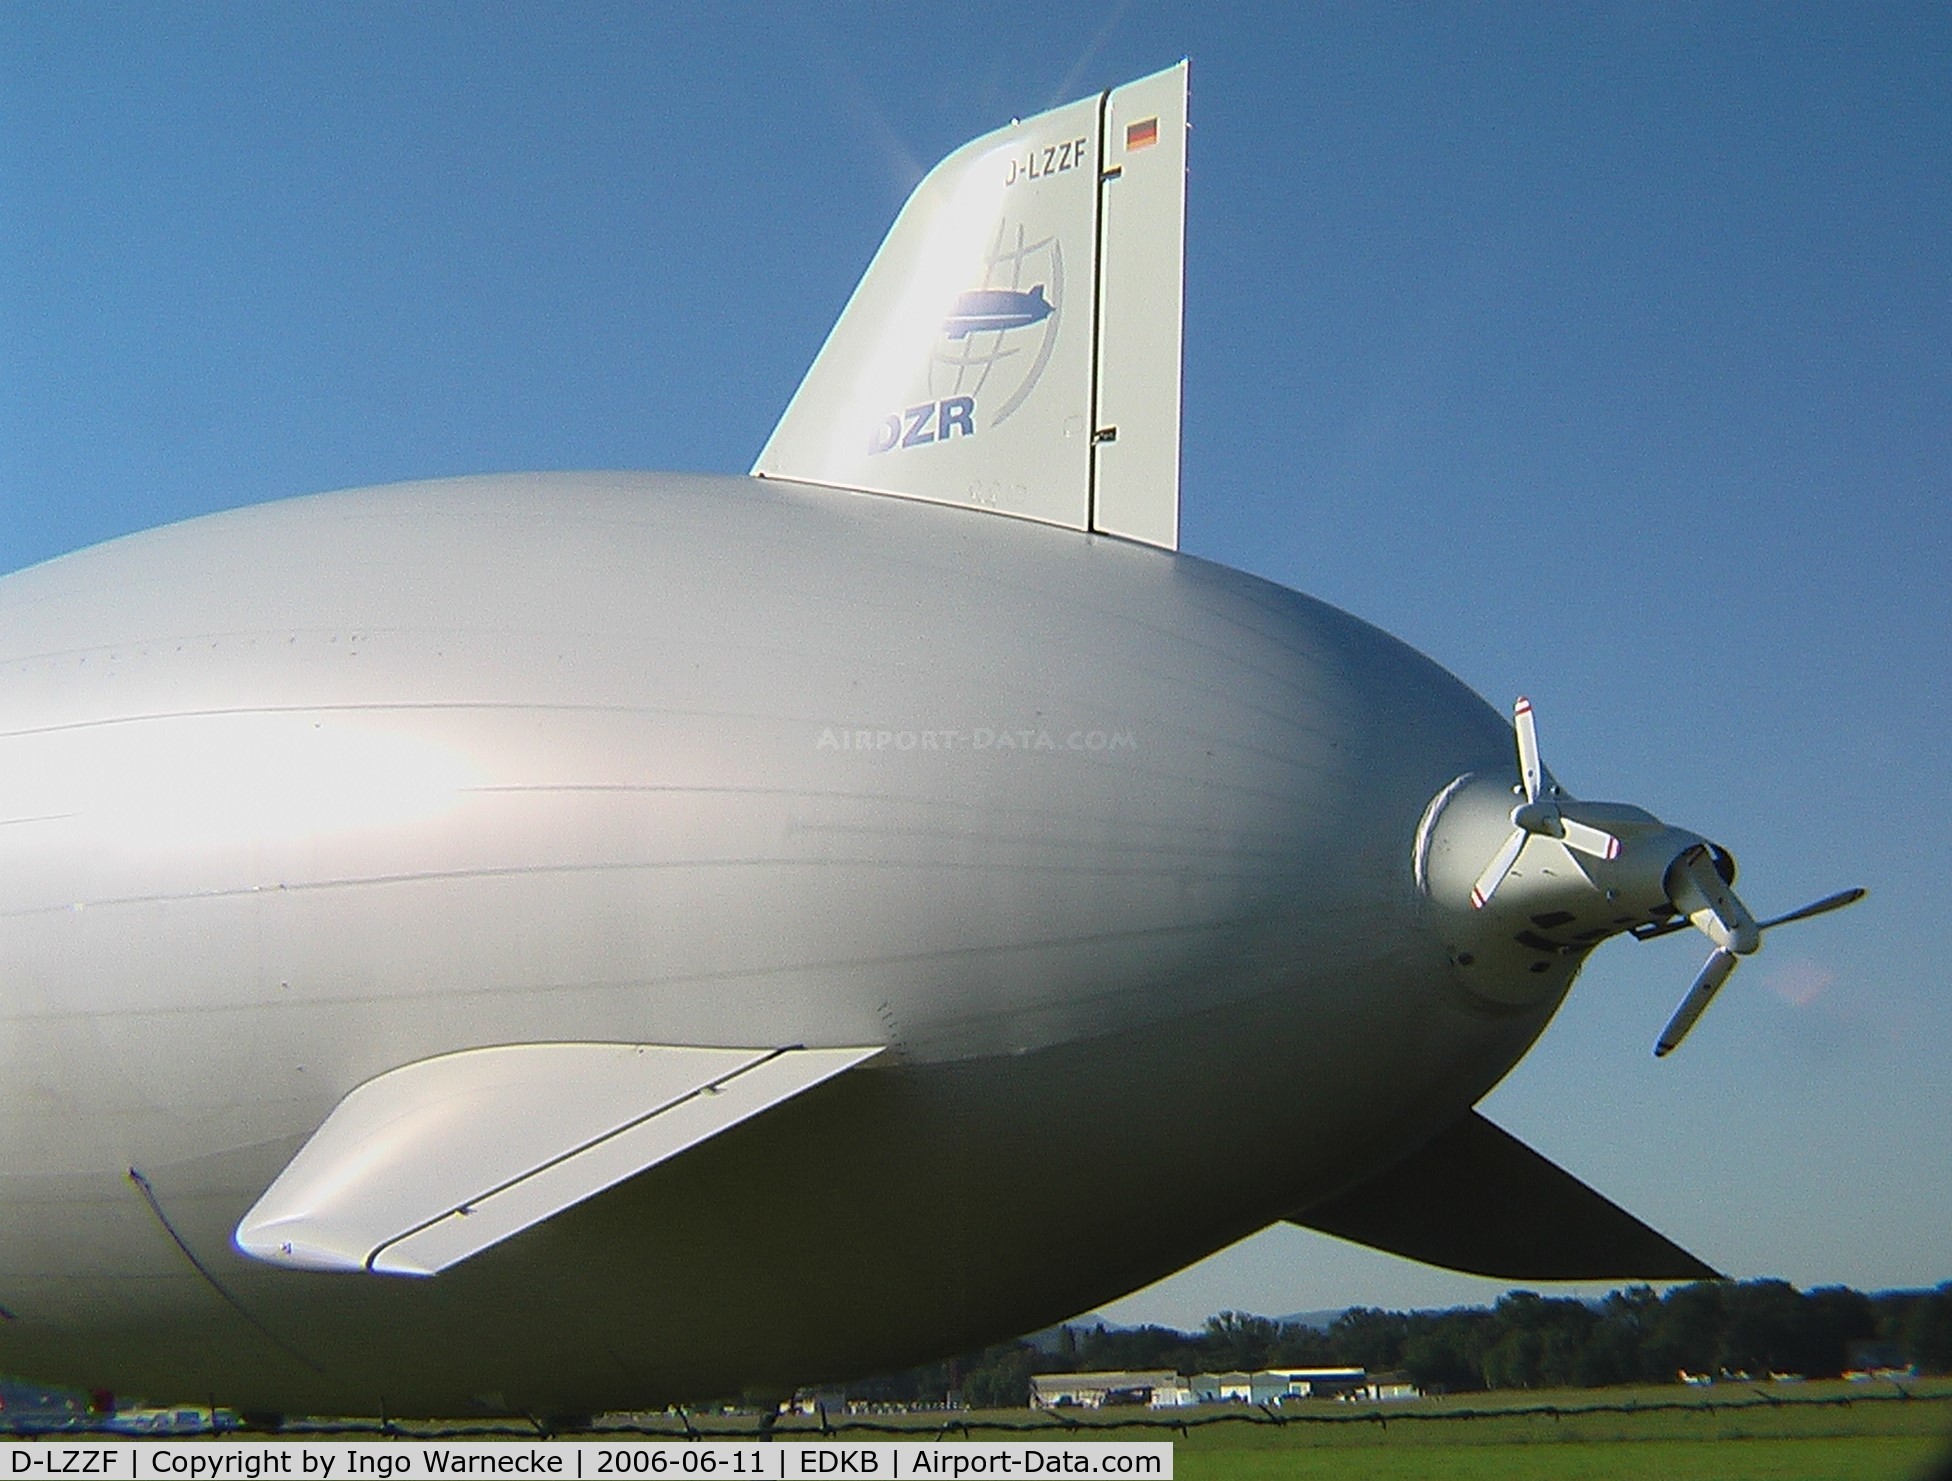 D-LZZF, 1998 Zeppelin NT07 C/N 3, Zeppelin NT - Deutsche Zeppelin Reederei / DLR at Bonn/Hangelar airfield